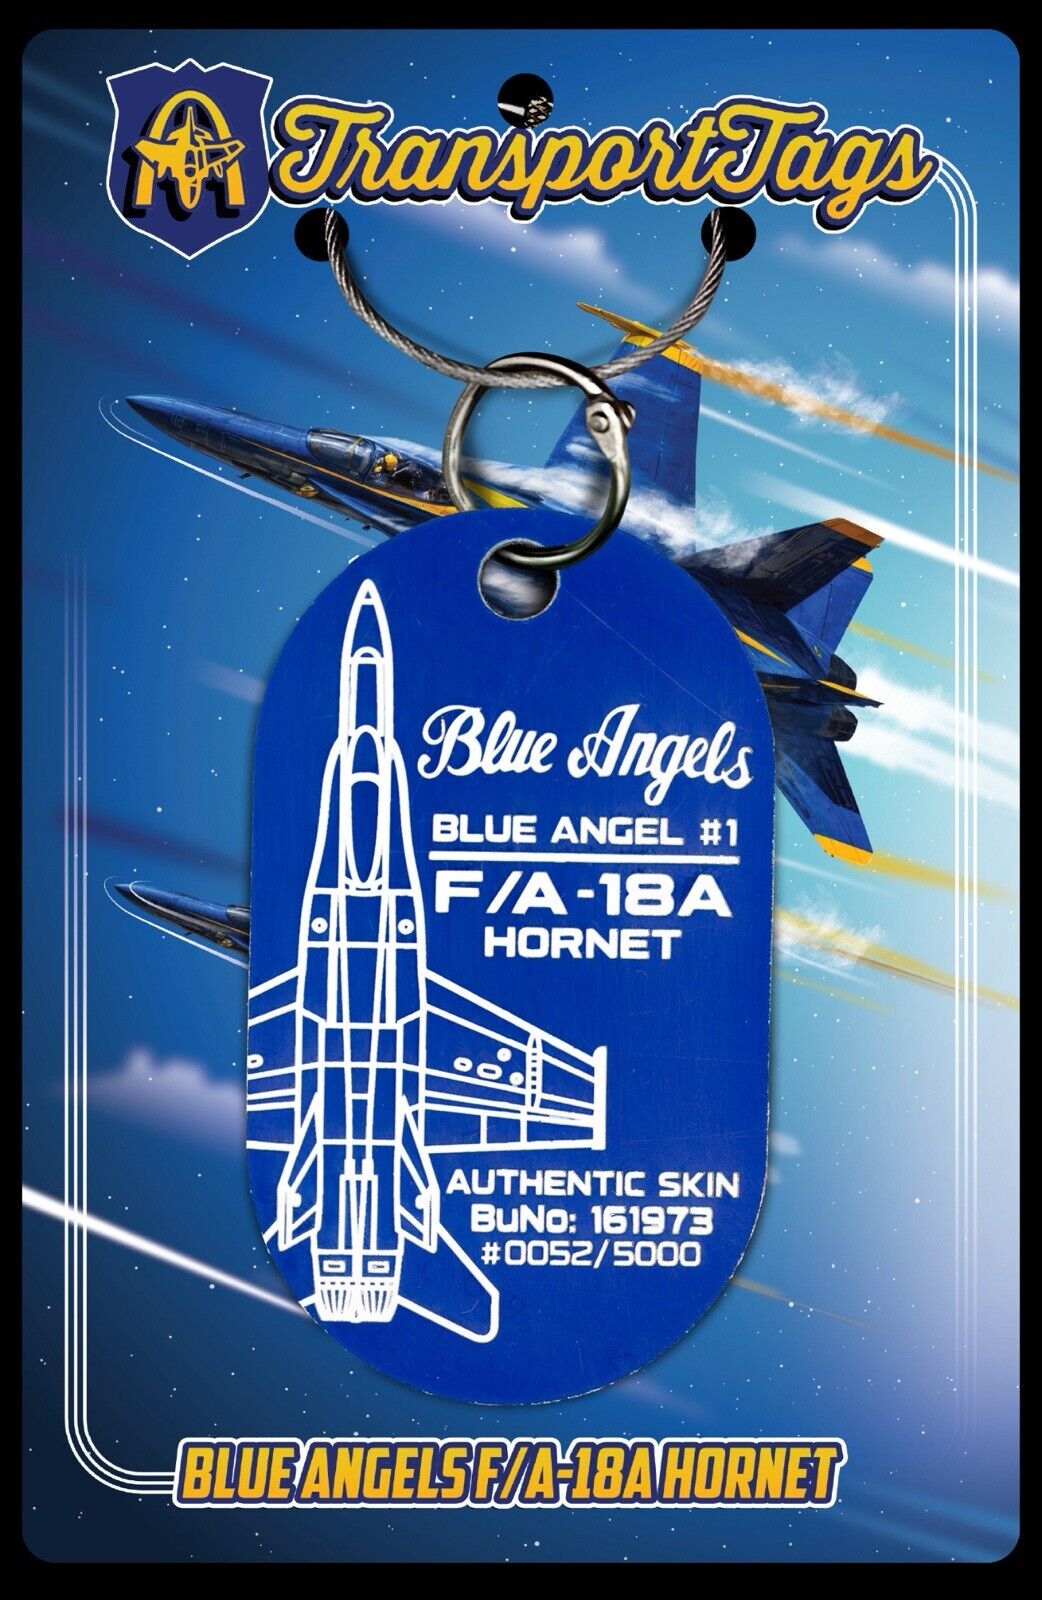 TransportTags Blue Angels Hornet/planetags